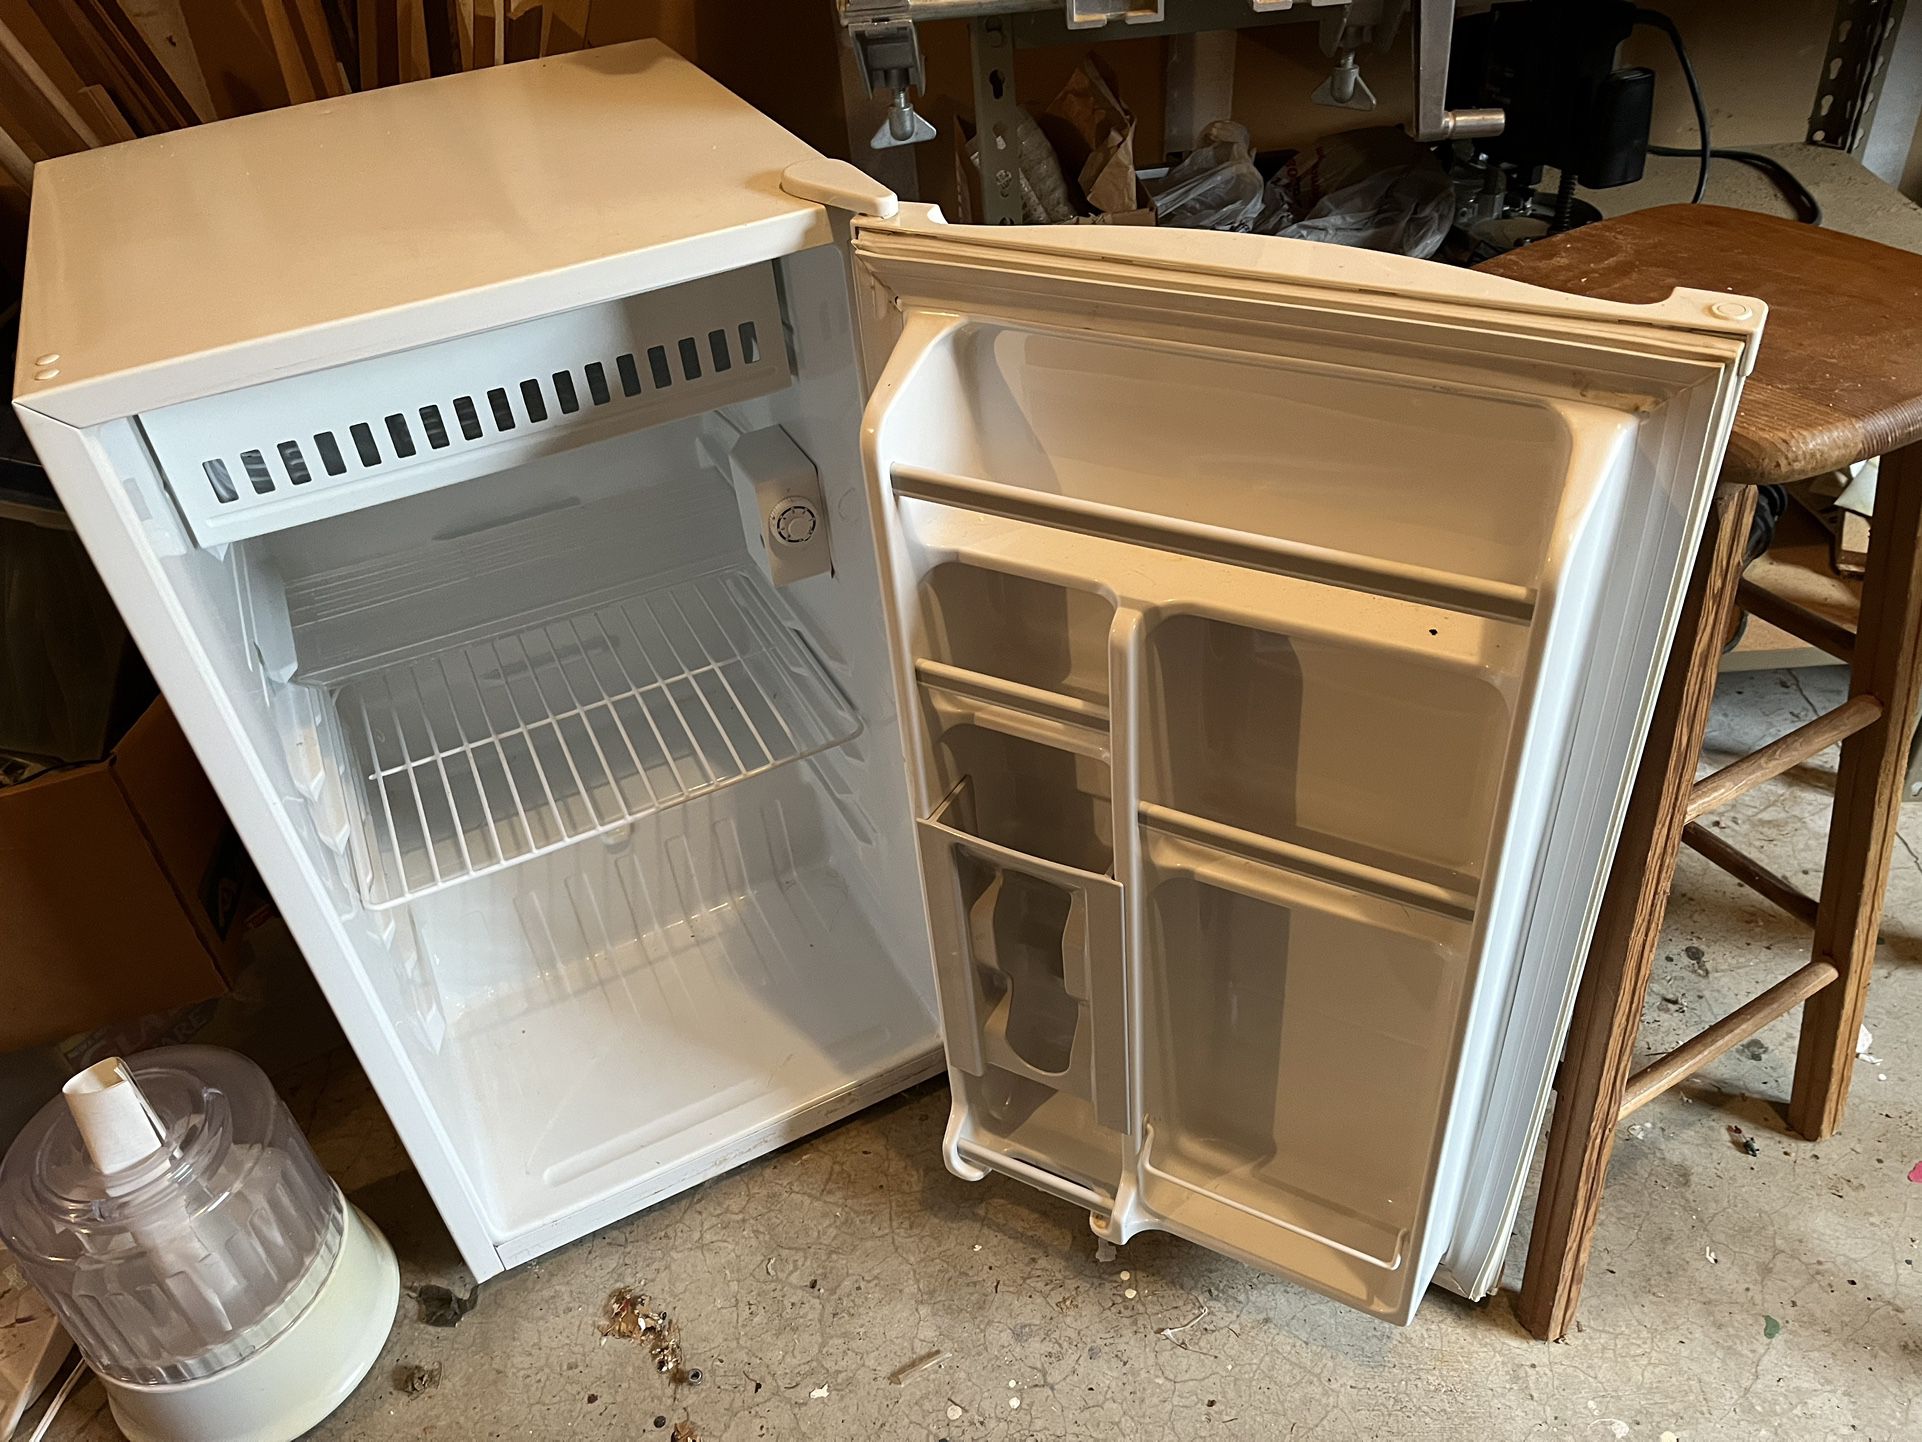 Magic chef Dorm Sized Refrigerator 